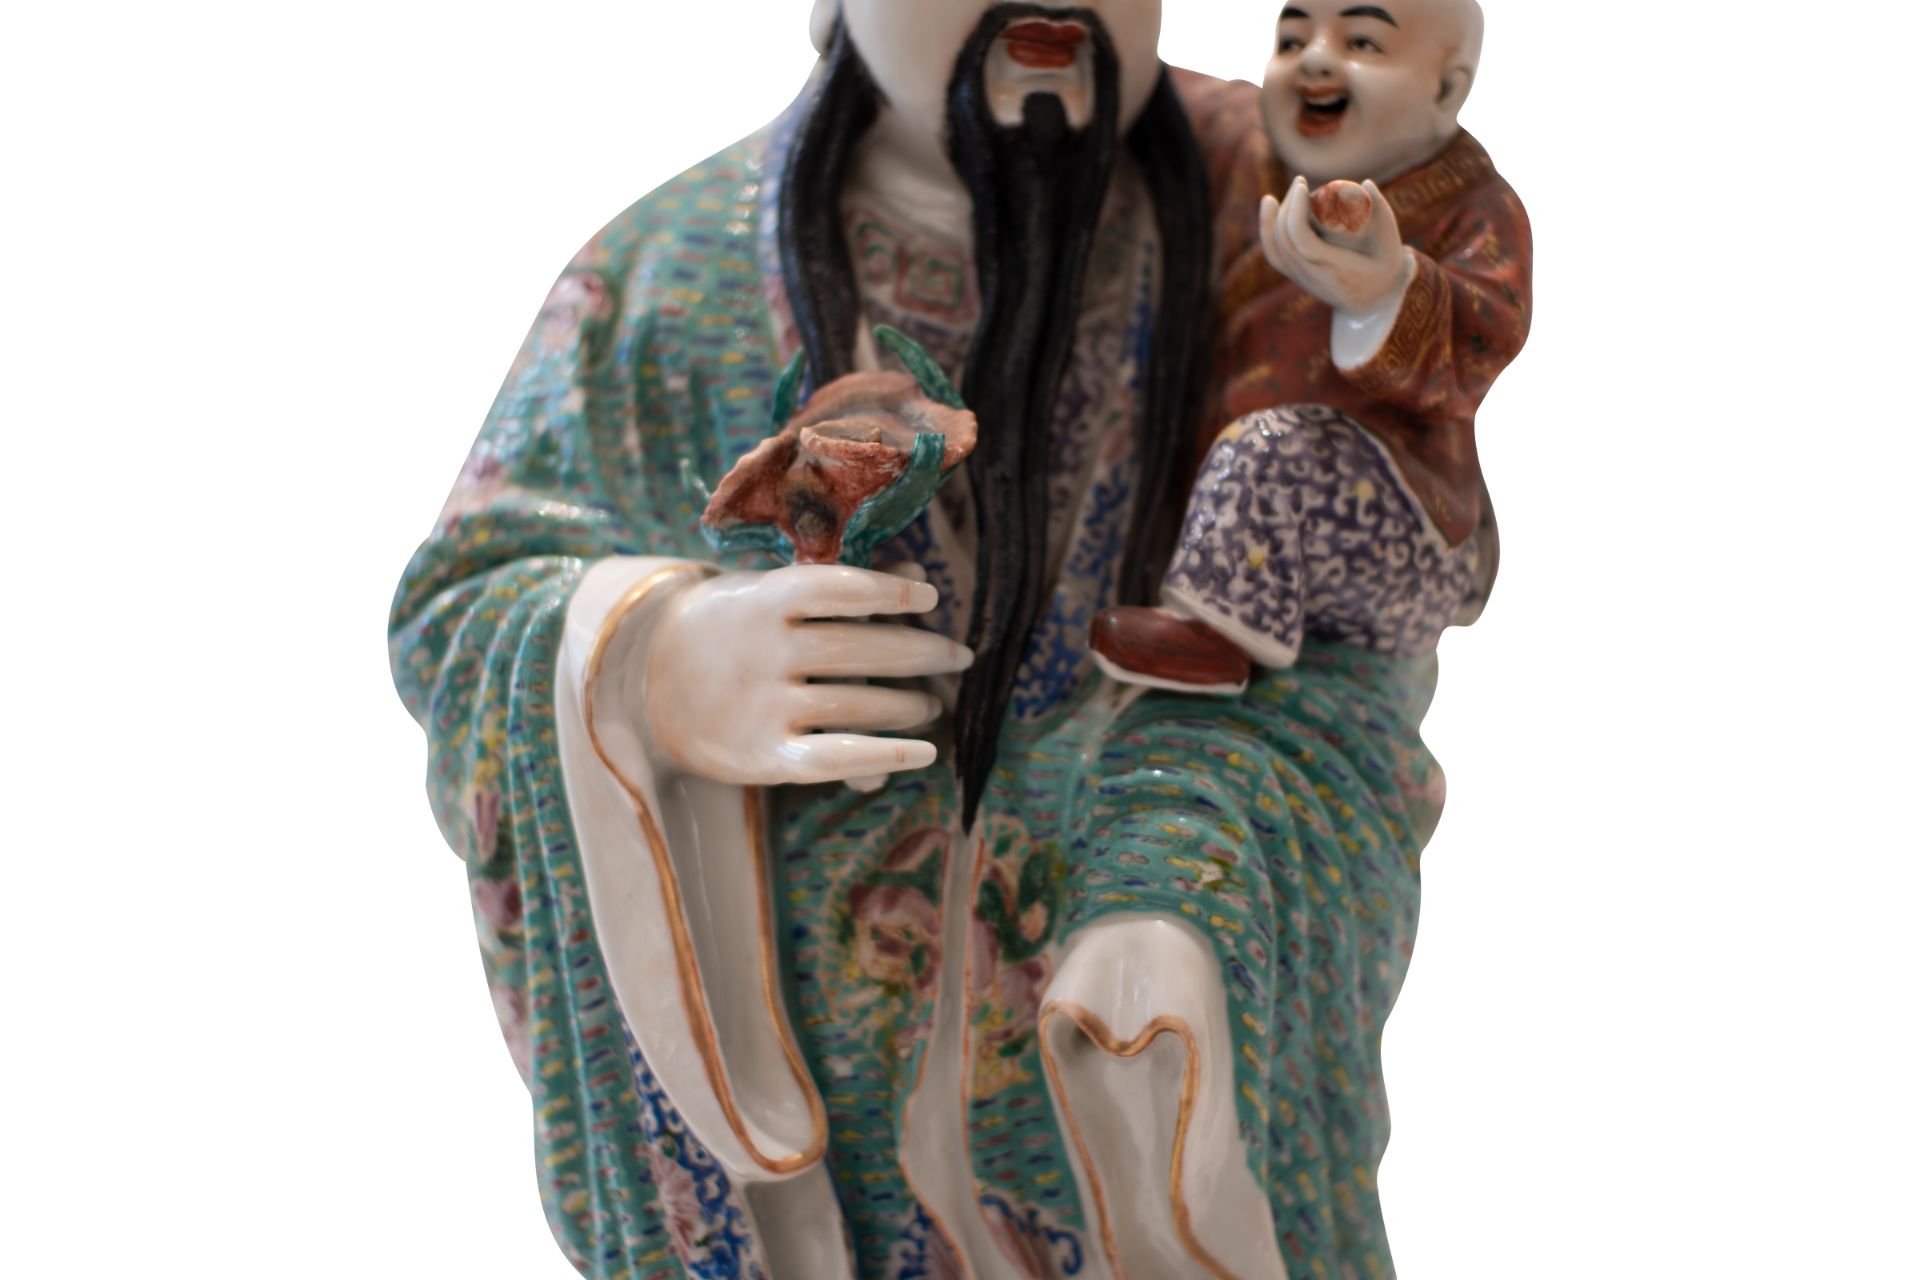 Asian Priest with Child | Asiatischer Priester mit Kind - Image 3 of 9